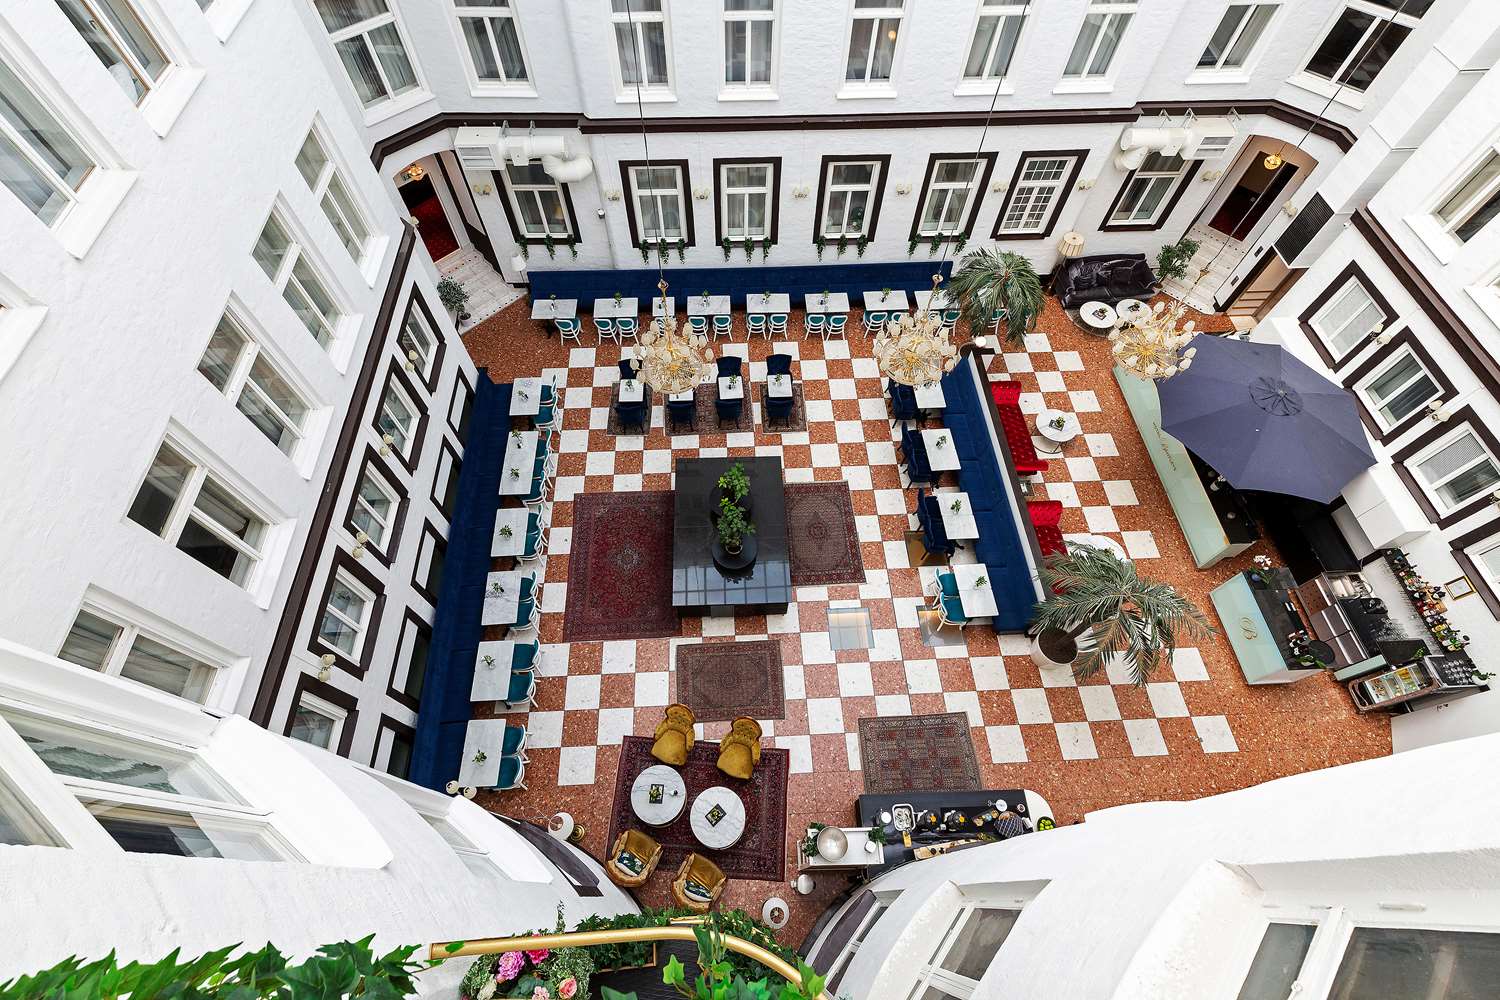 Le lit - Picture of The Chess Hotel, Paris - Tripadvisor